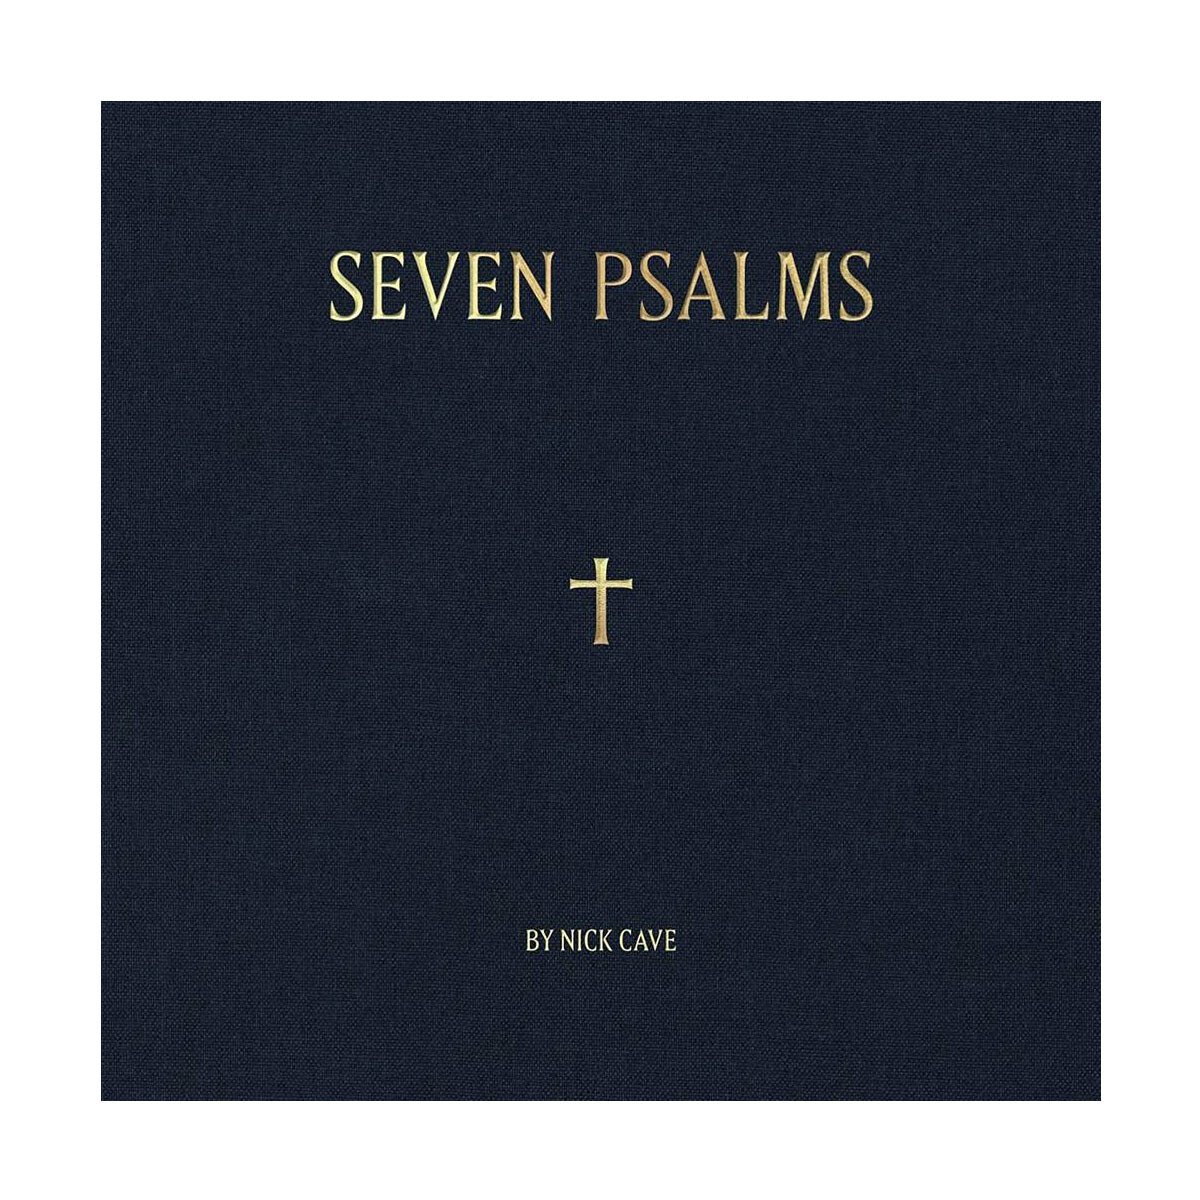 (l) Cave, Nick - Seven Psalms - Vinilo 